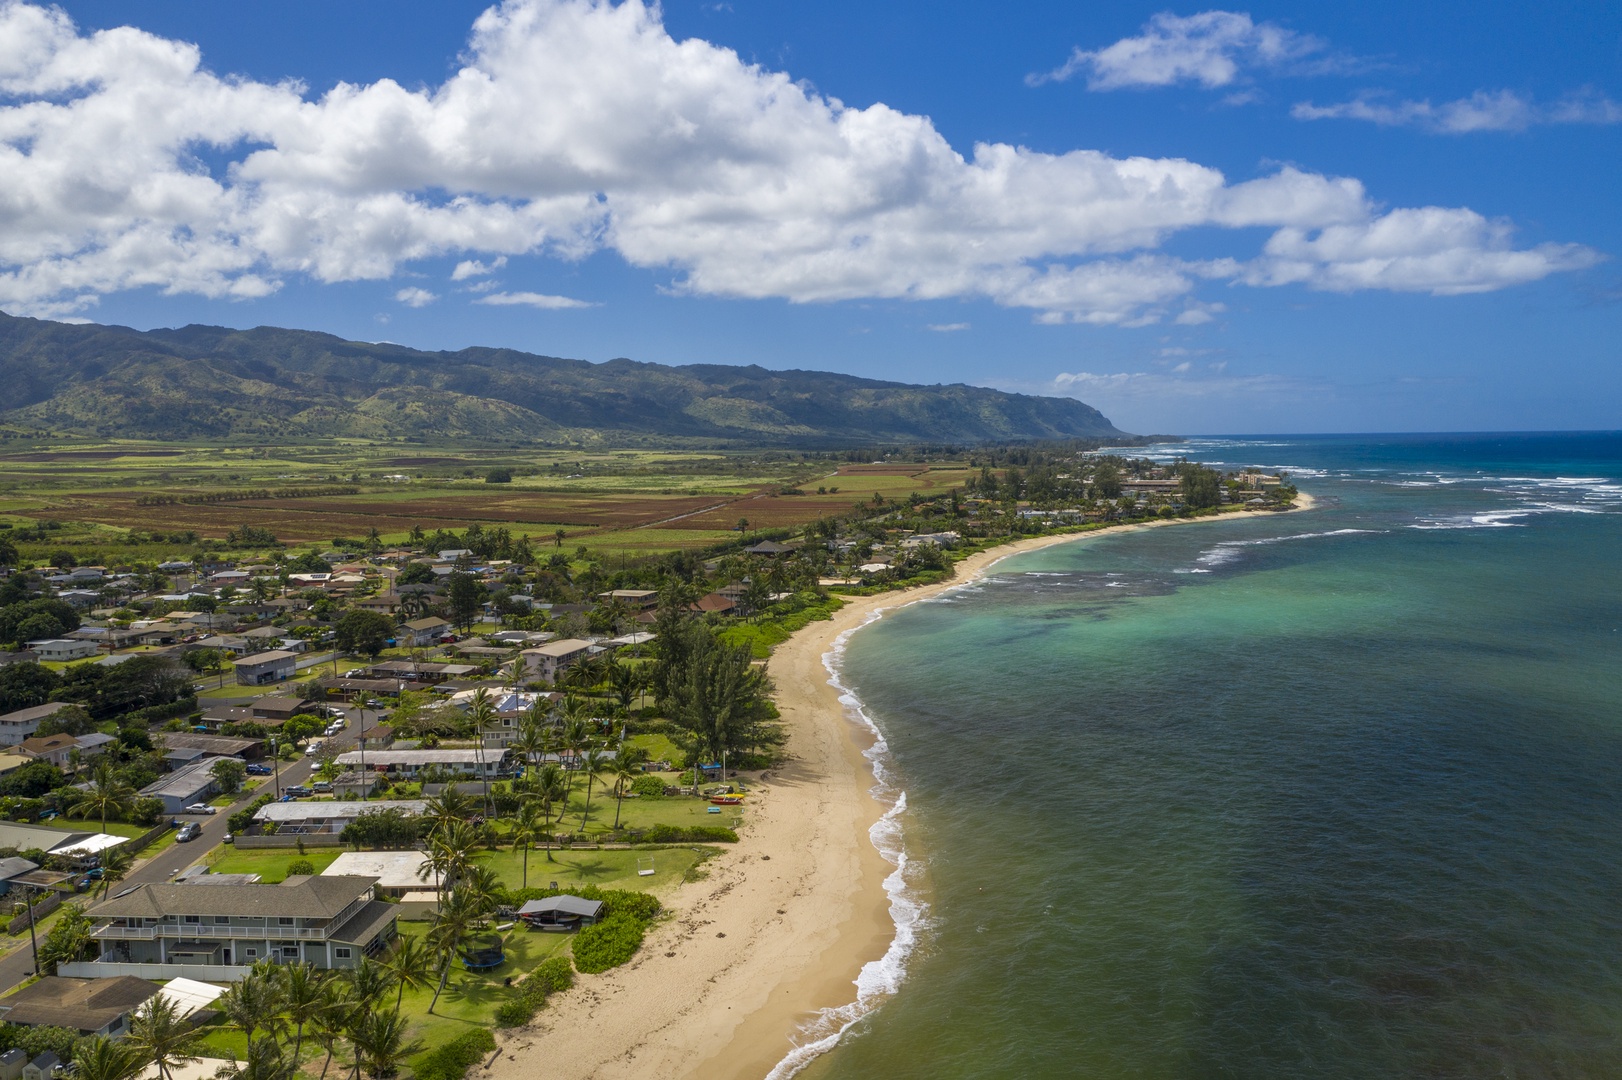 Waialua Vacation Rentals, Kala'iku* - Golden sands, clear water, and mountain views!